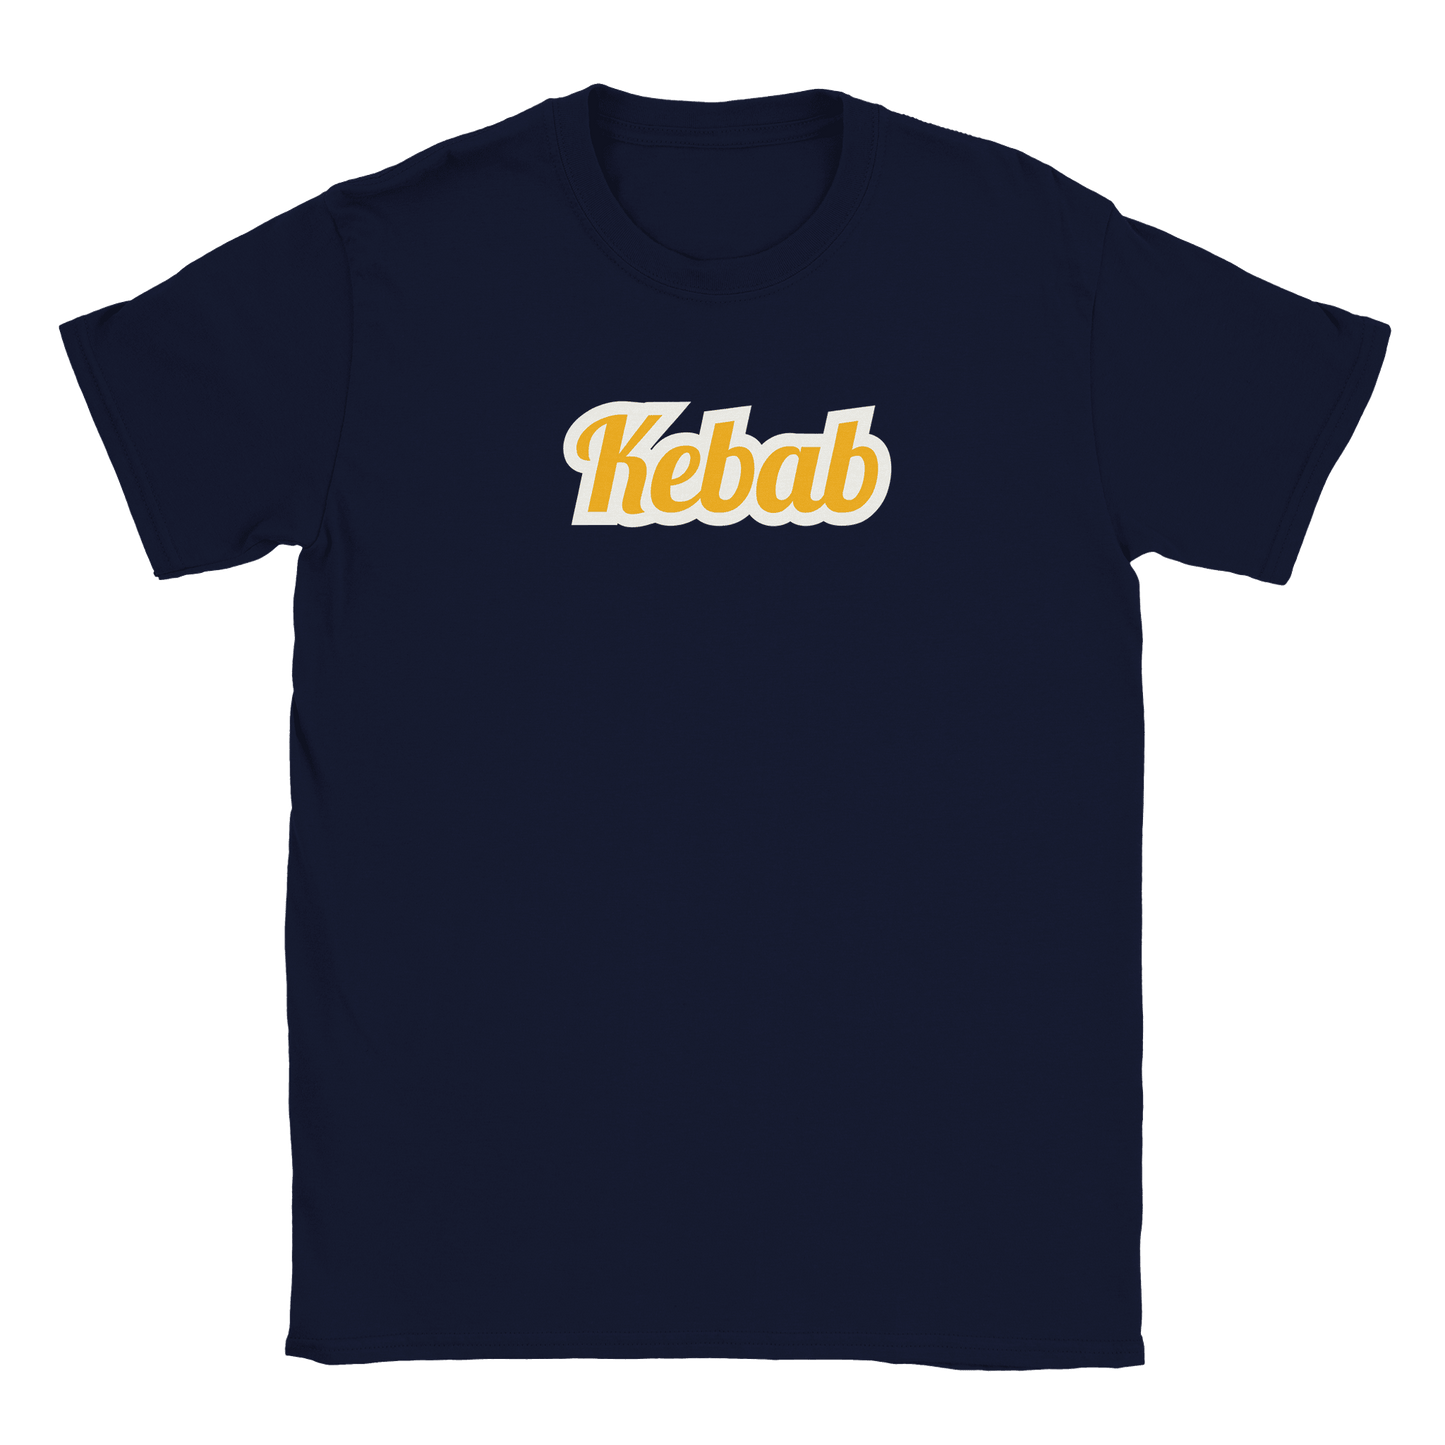 Kebab - T-shirt Marinblå